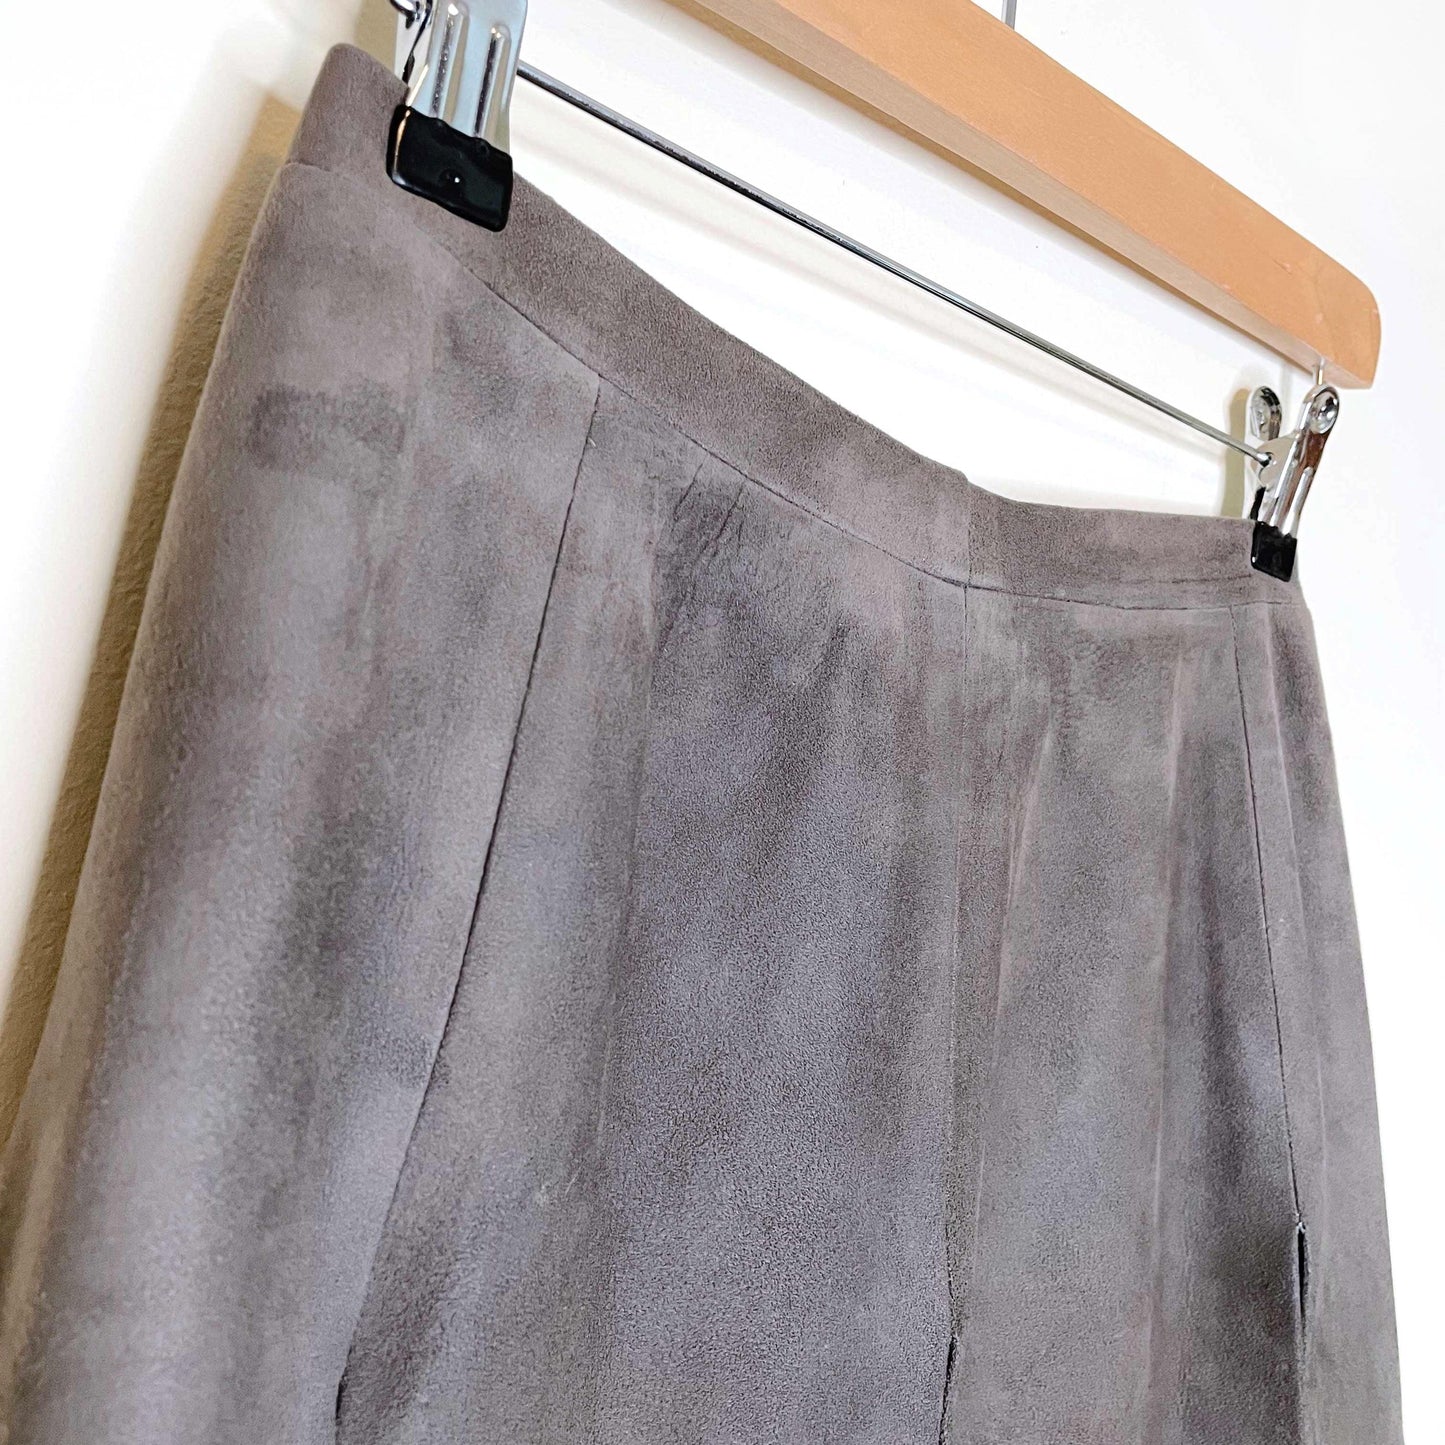 vintage high rise multi-slit suede skirt - size 2